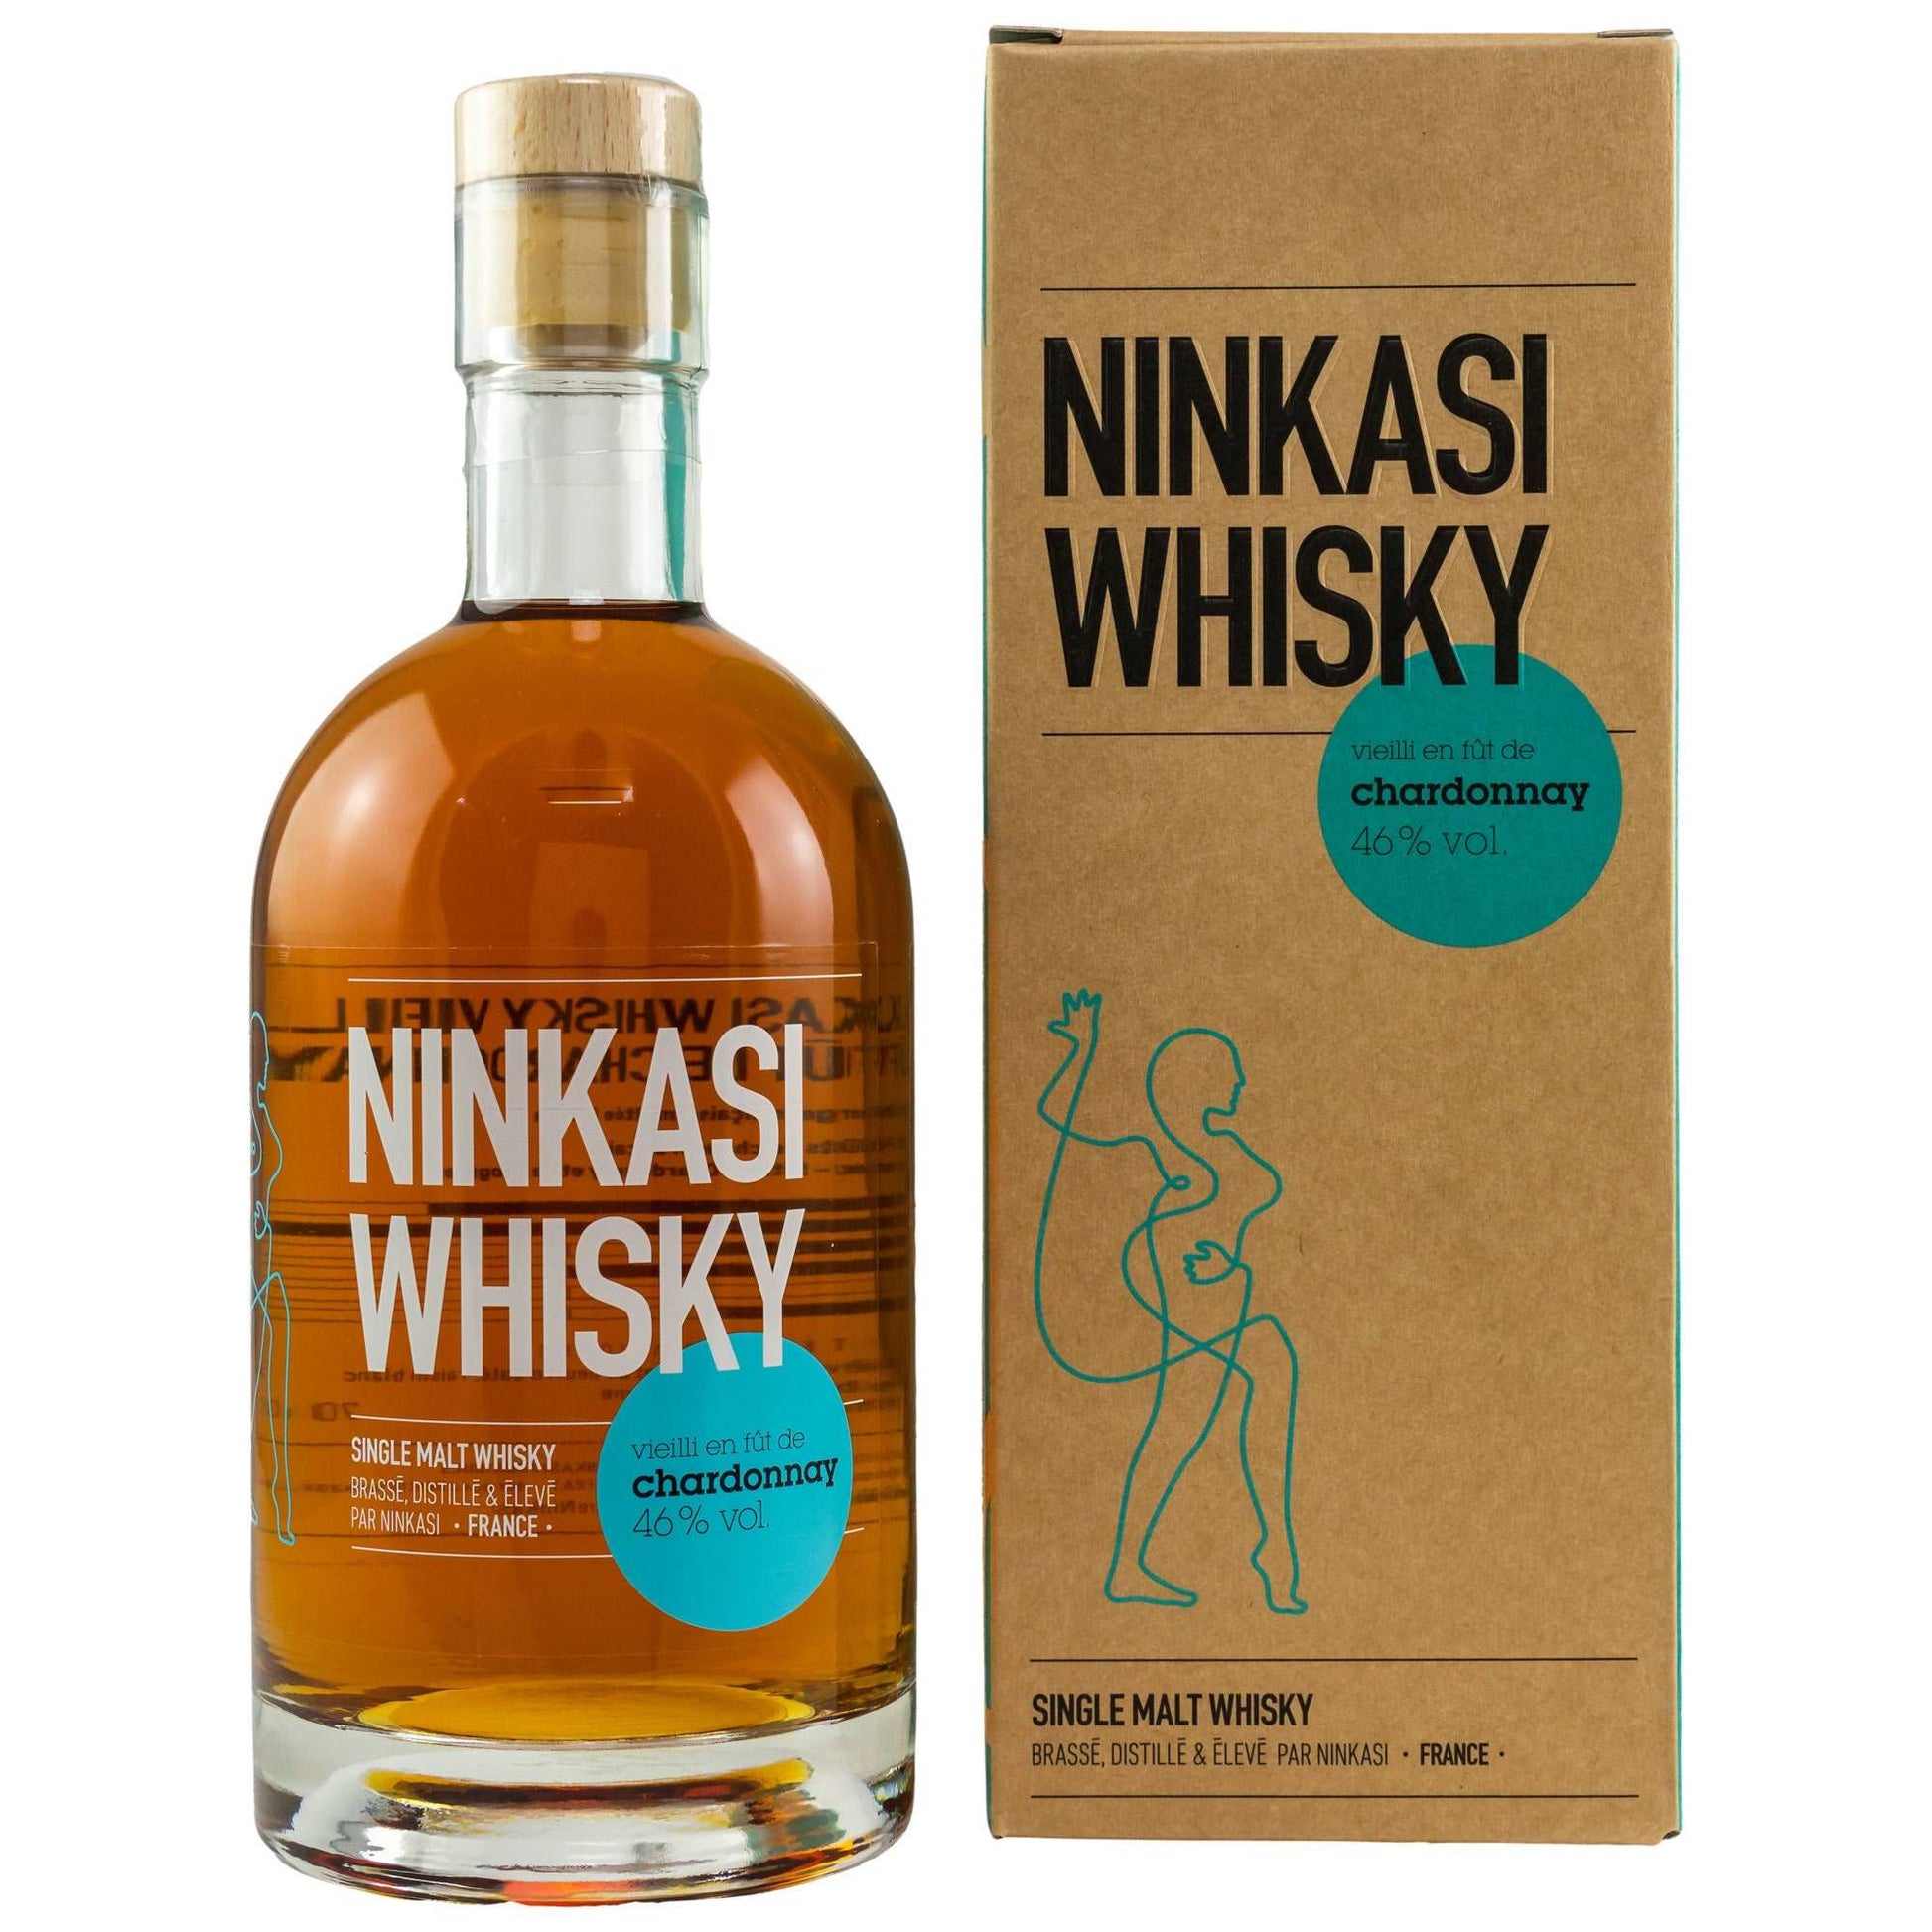 Ninkasi Whisky | Chardonnay Cask | Single Malt French Whisky | 0,7l | 46%GET A BOTTLE